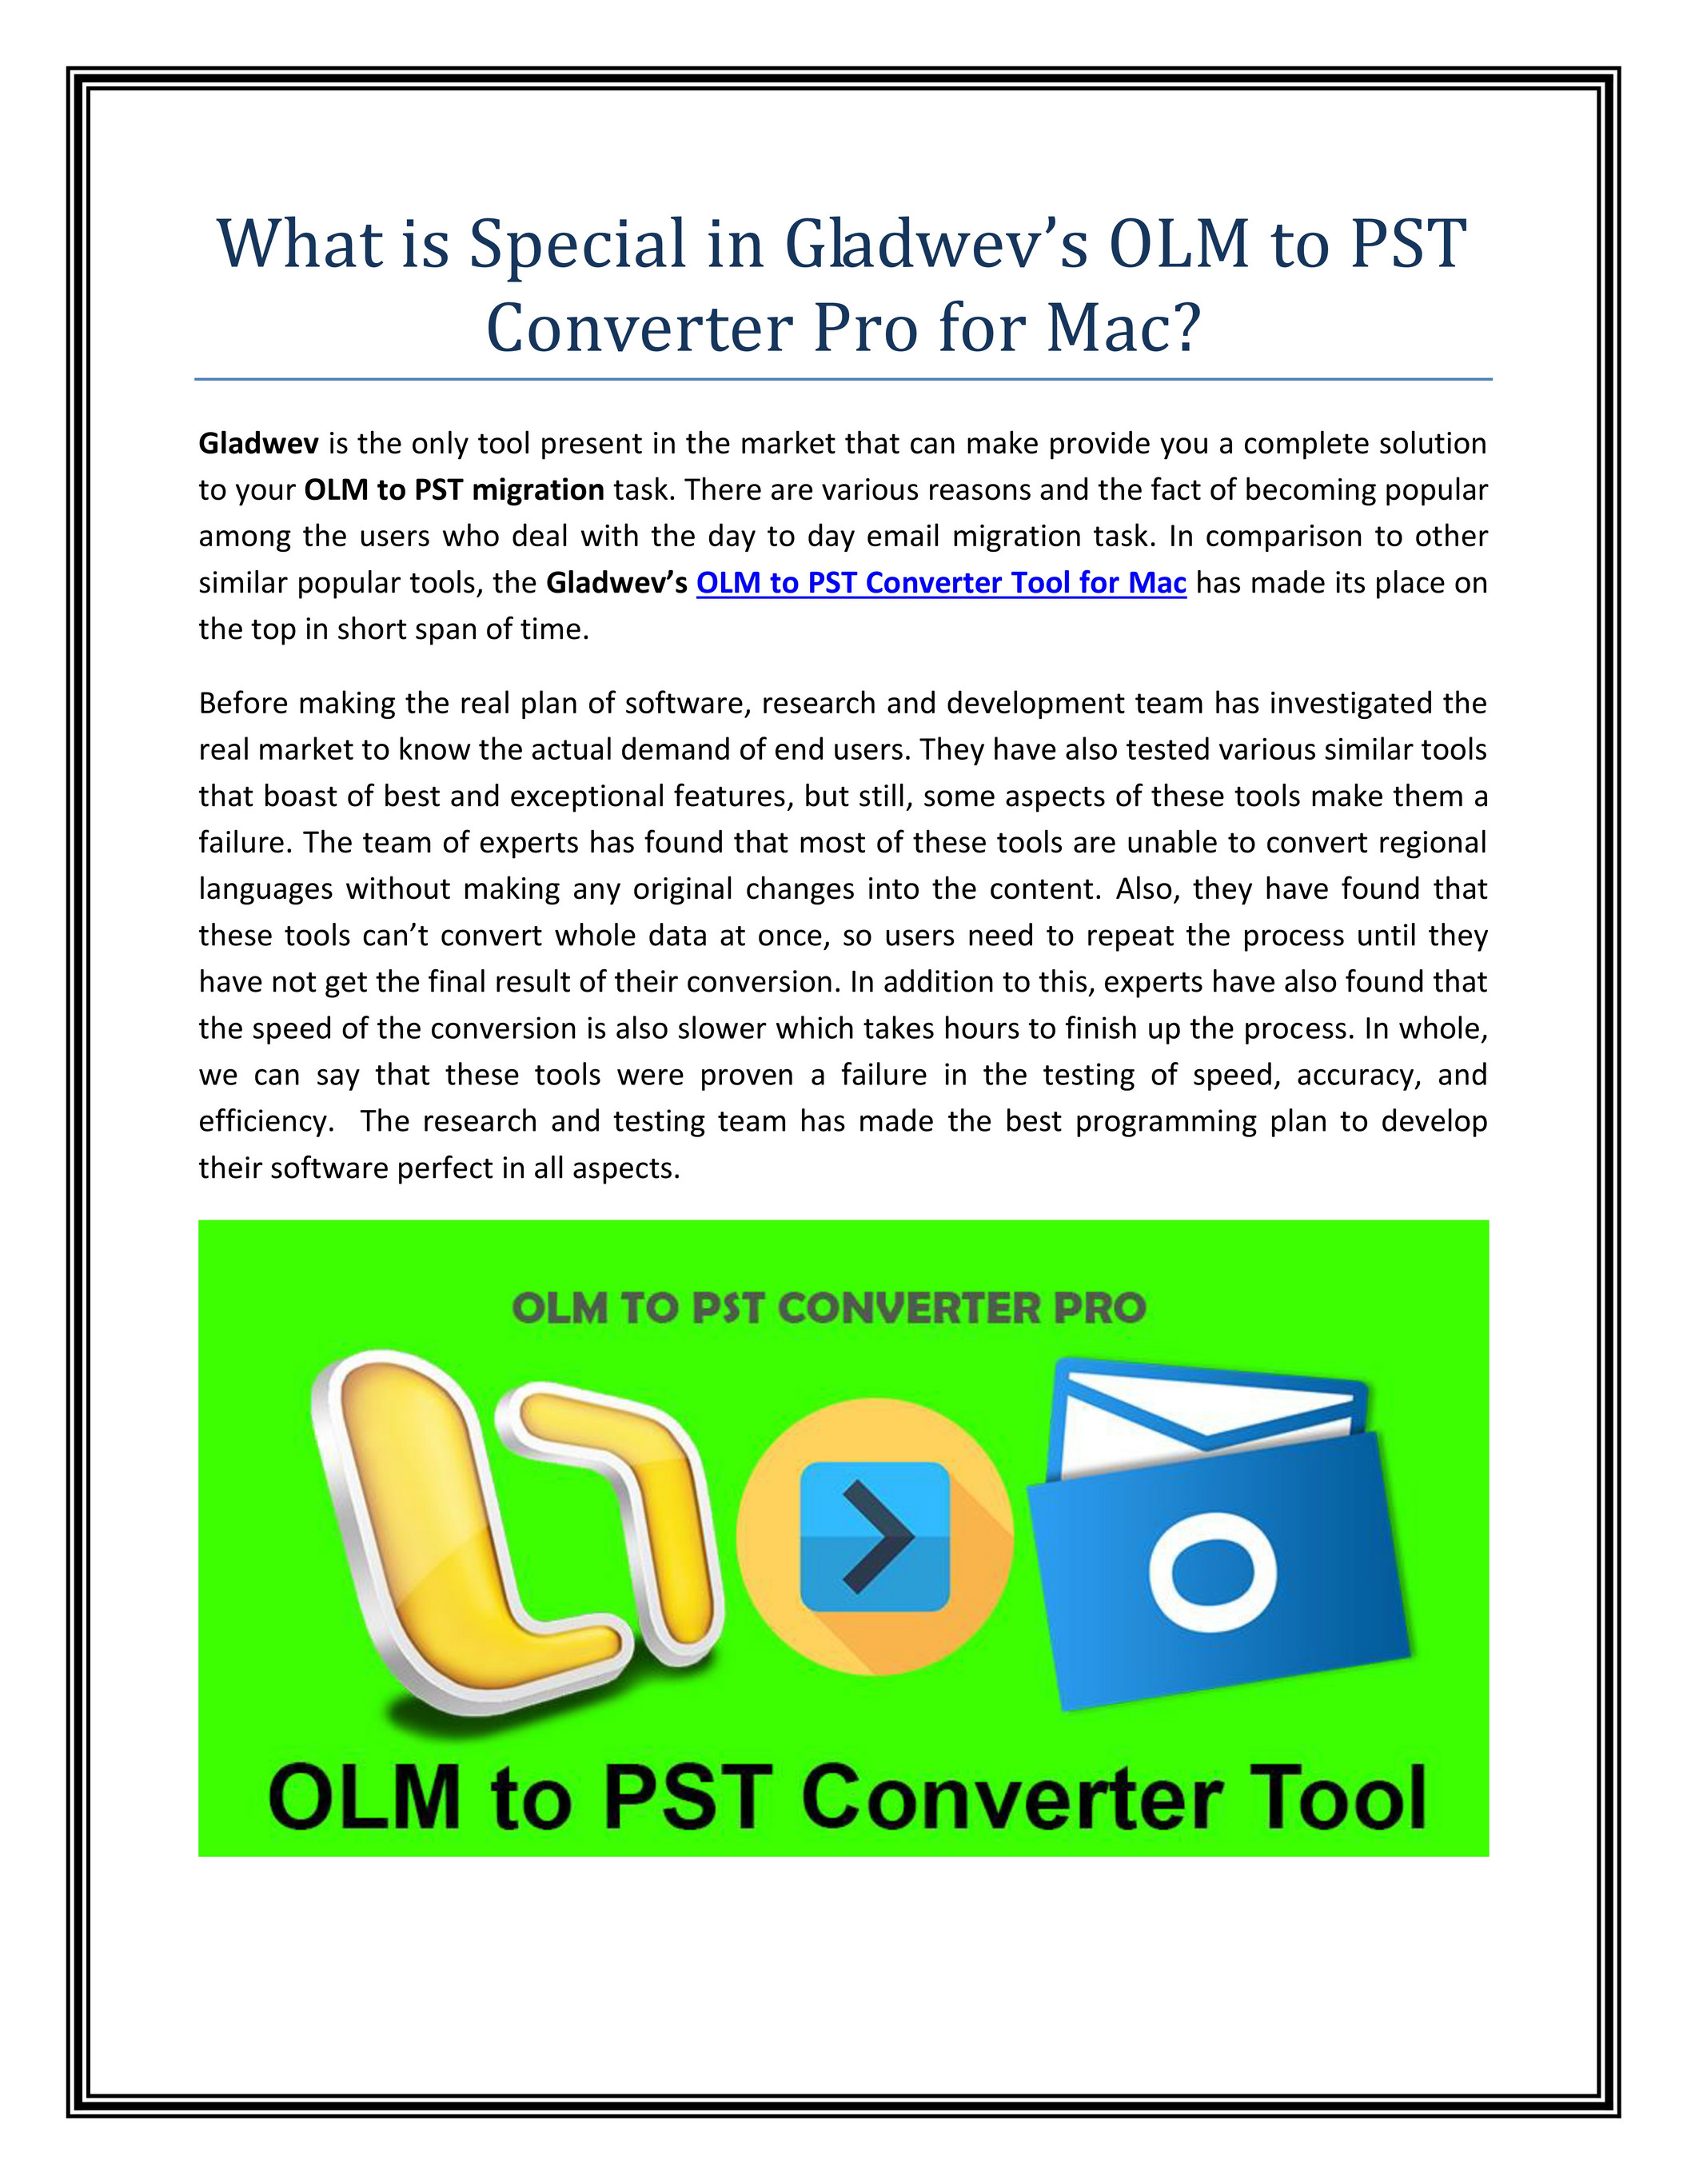 pst converter pro for mac